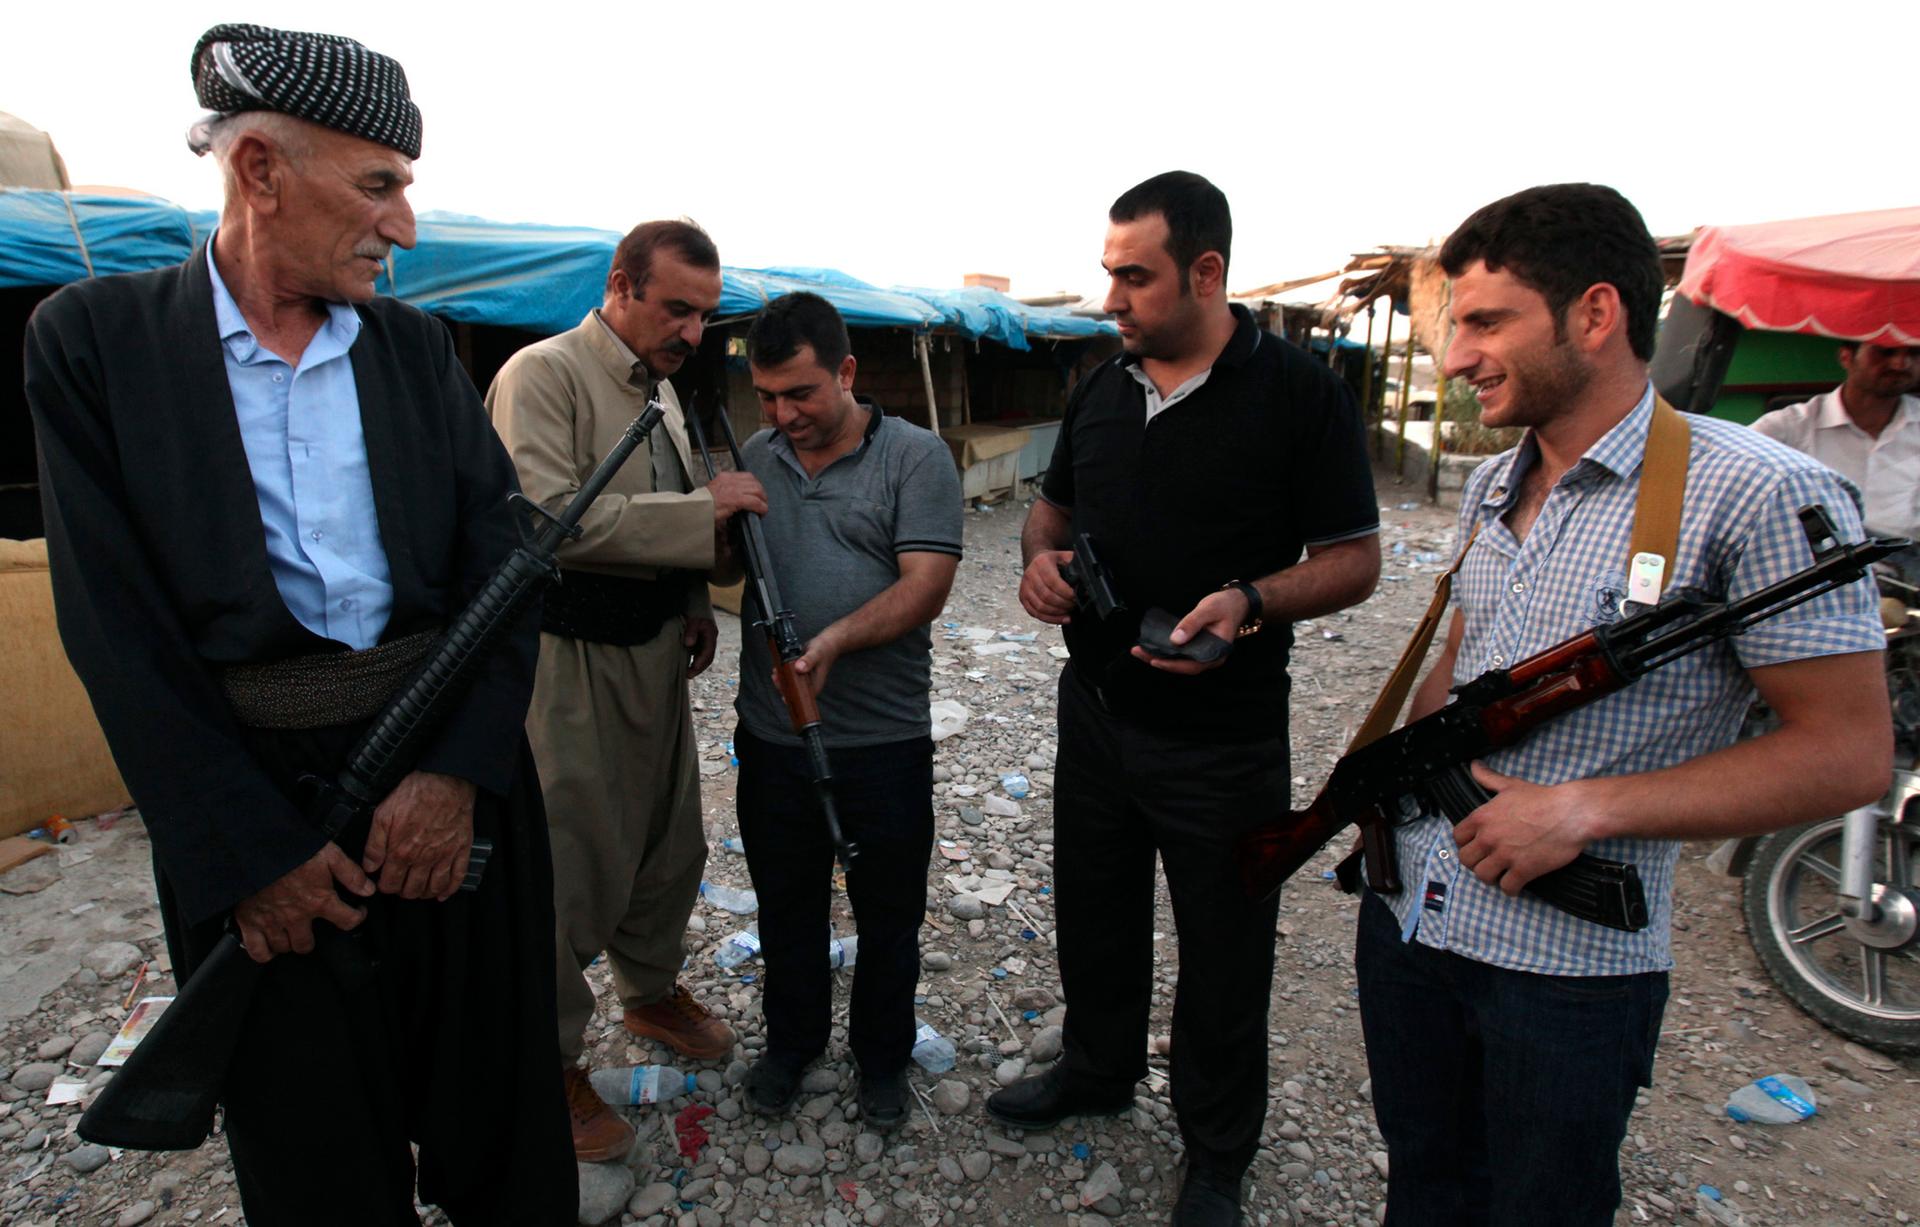 Kurdish men display weapons for sale at an arms market in Irbil, capital of the autonomous Kurdish region of northern Iraq.